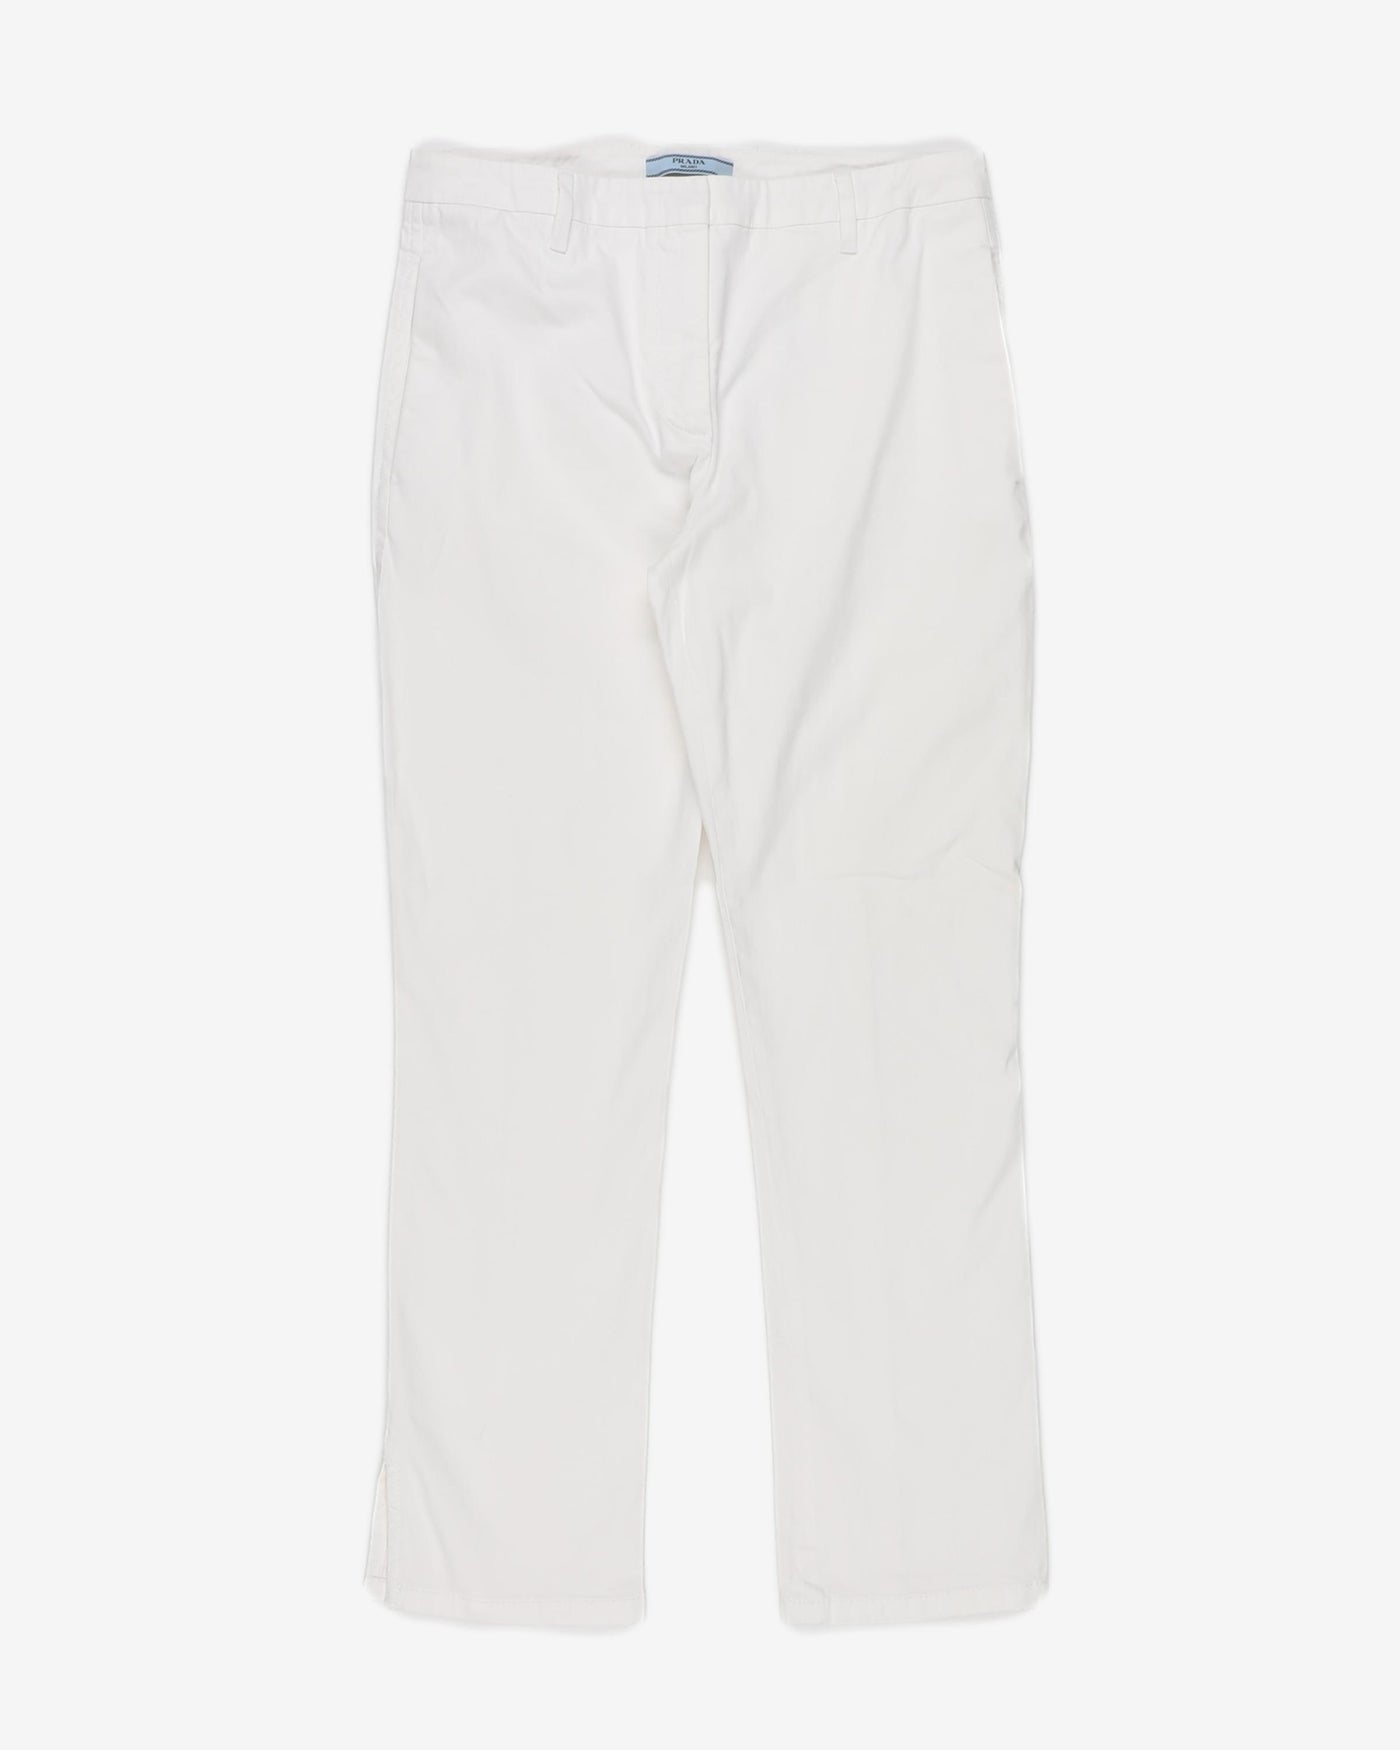 Prada Milano White Low Rise Skinny Fit Trousers - W29 L27